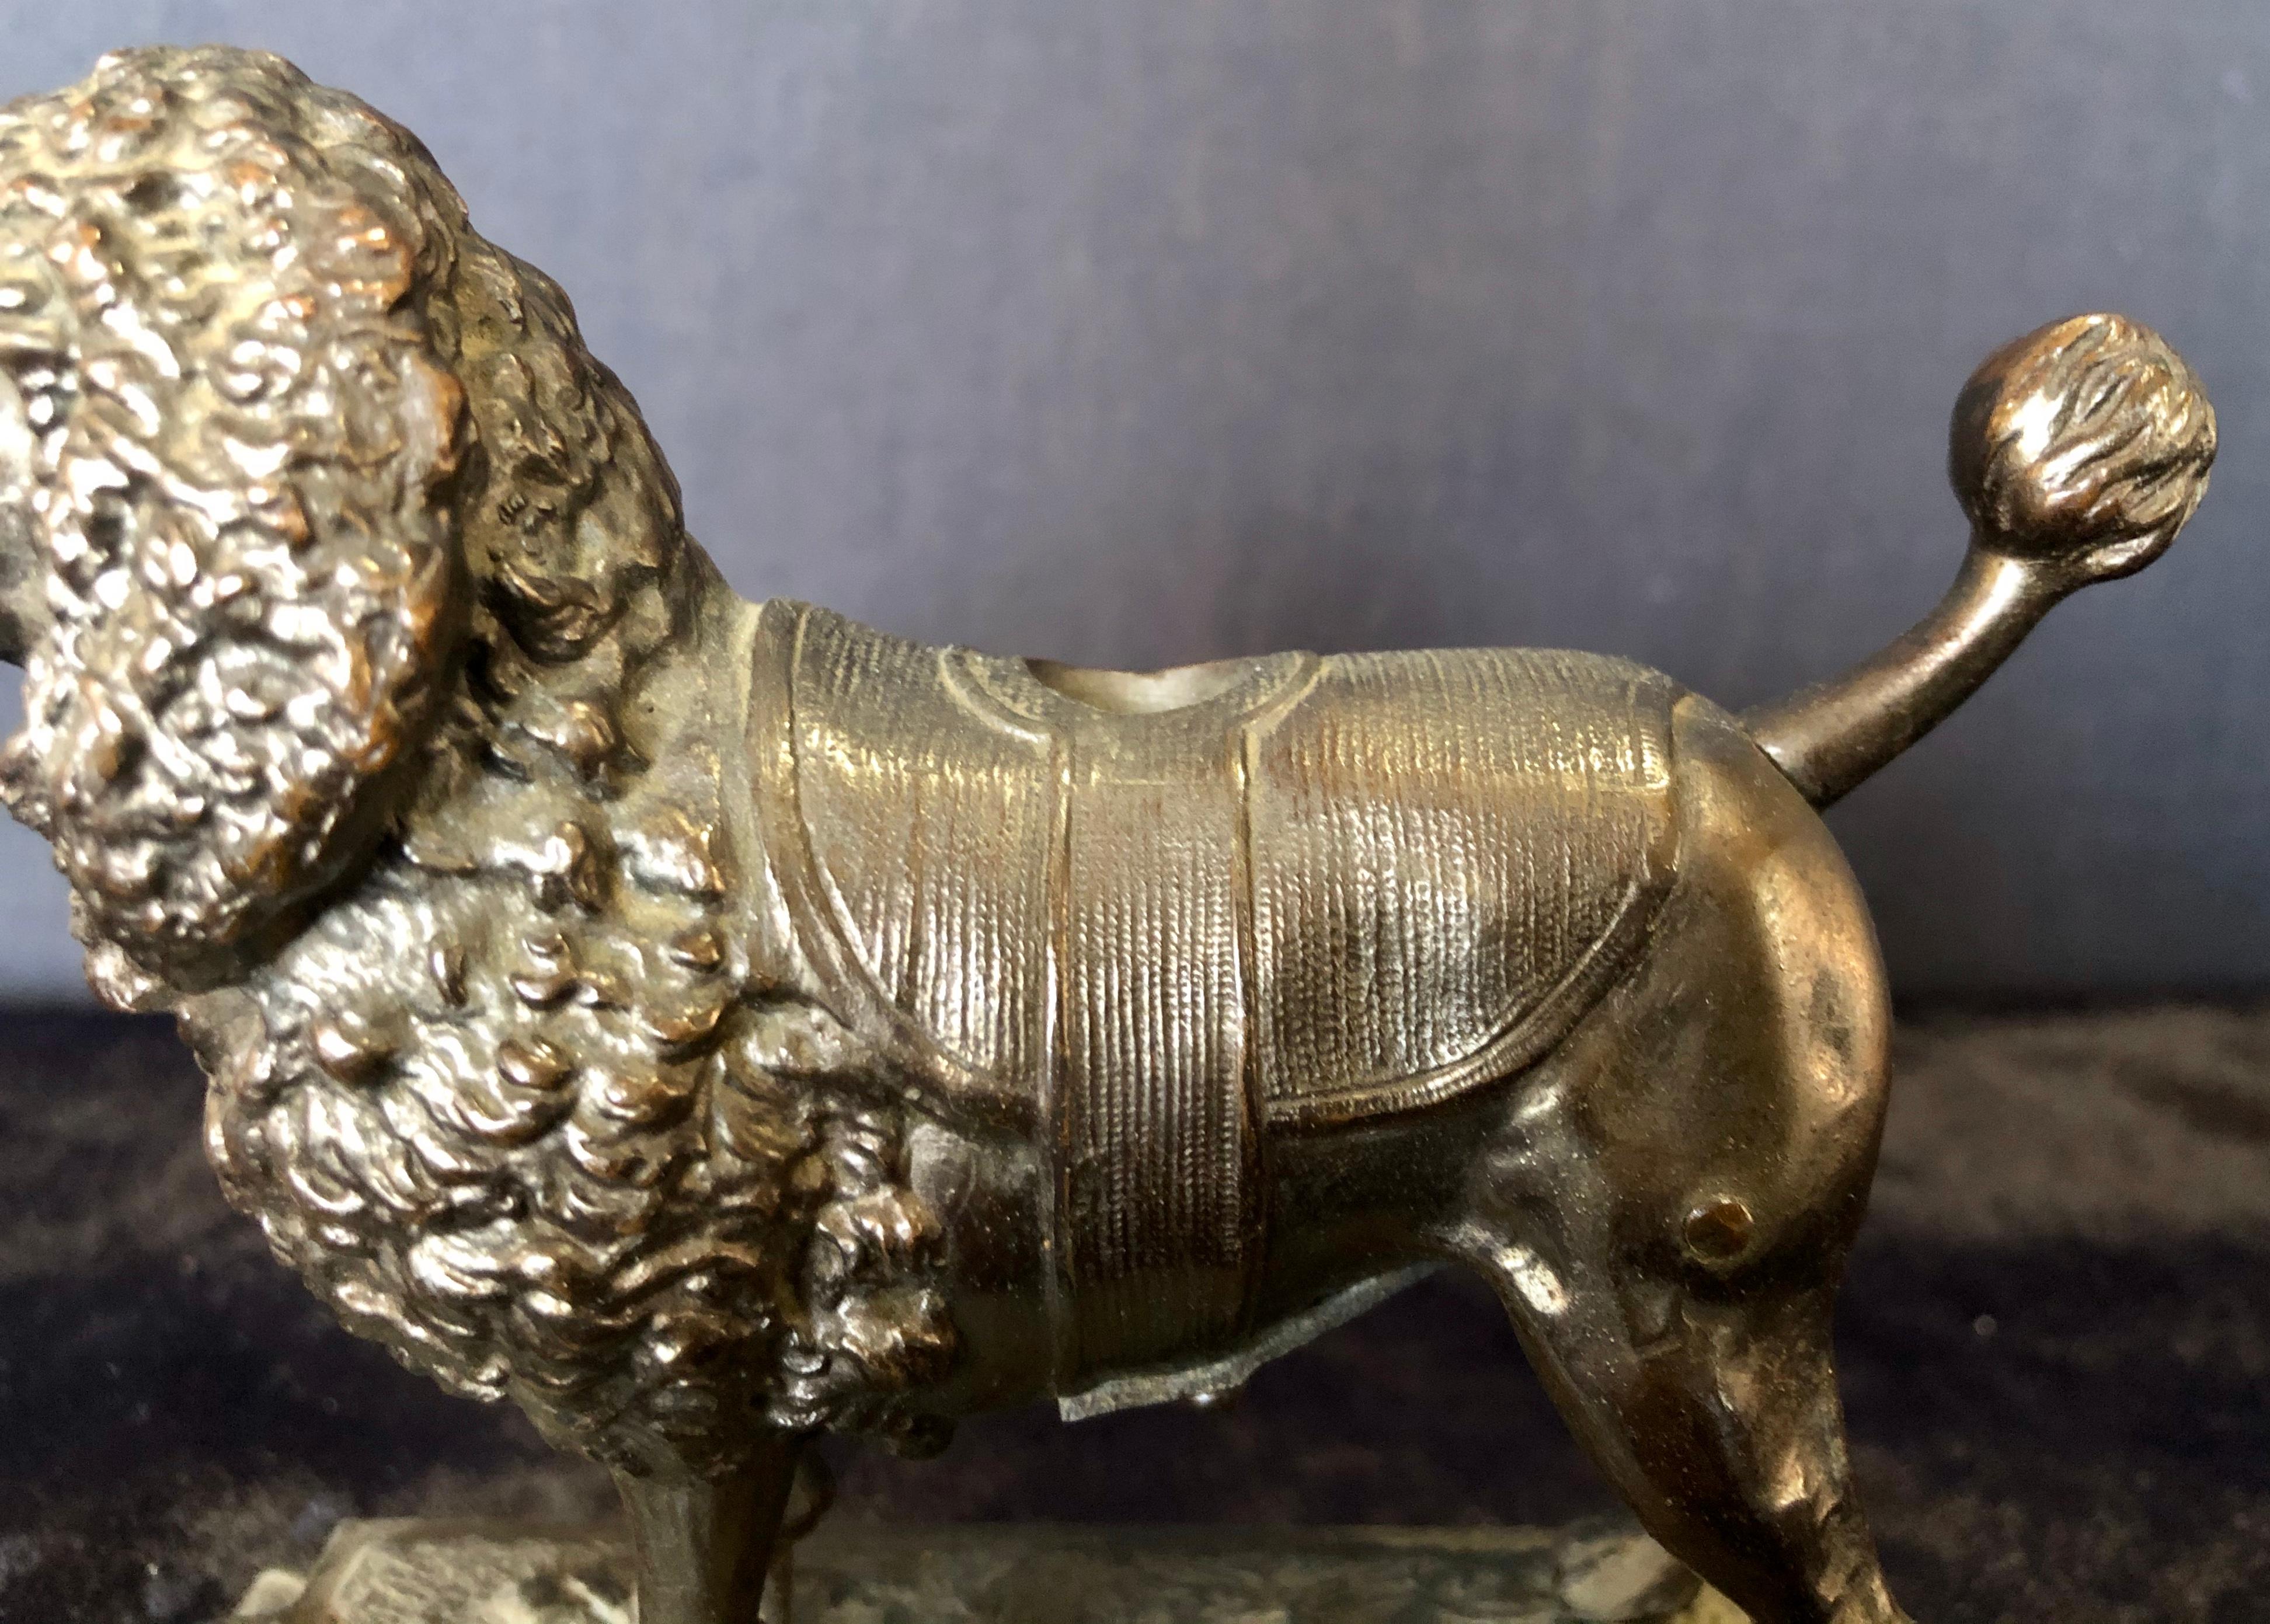 German Antique Metal Poodle Cigar Cutter, Animal Sculpture Part of a Large Collection